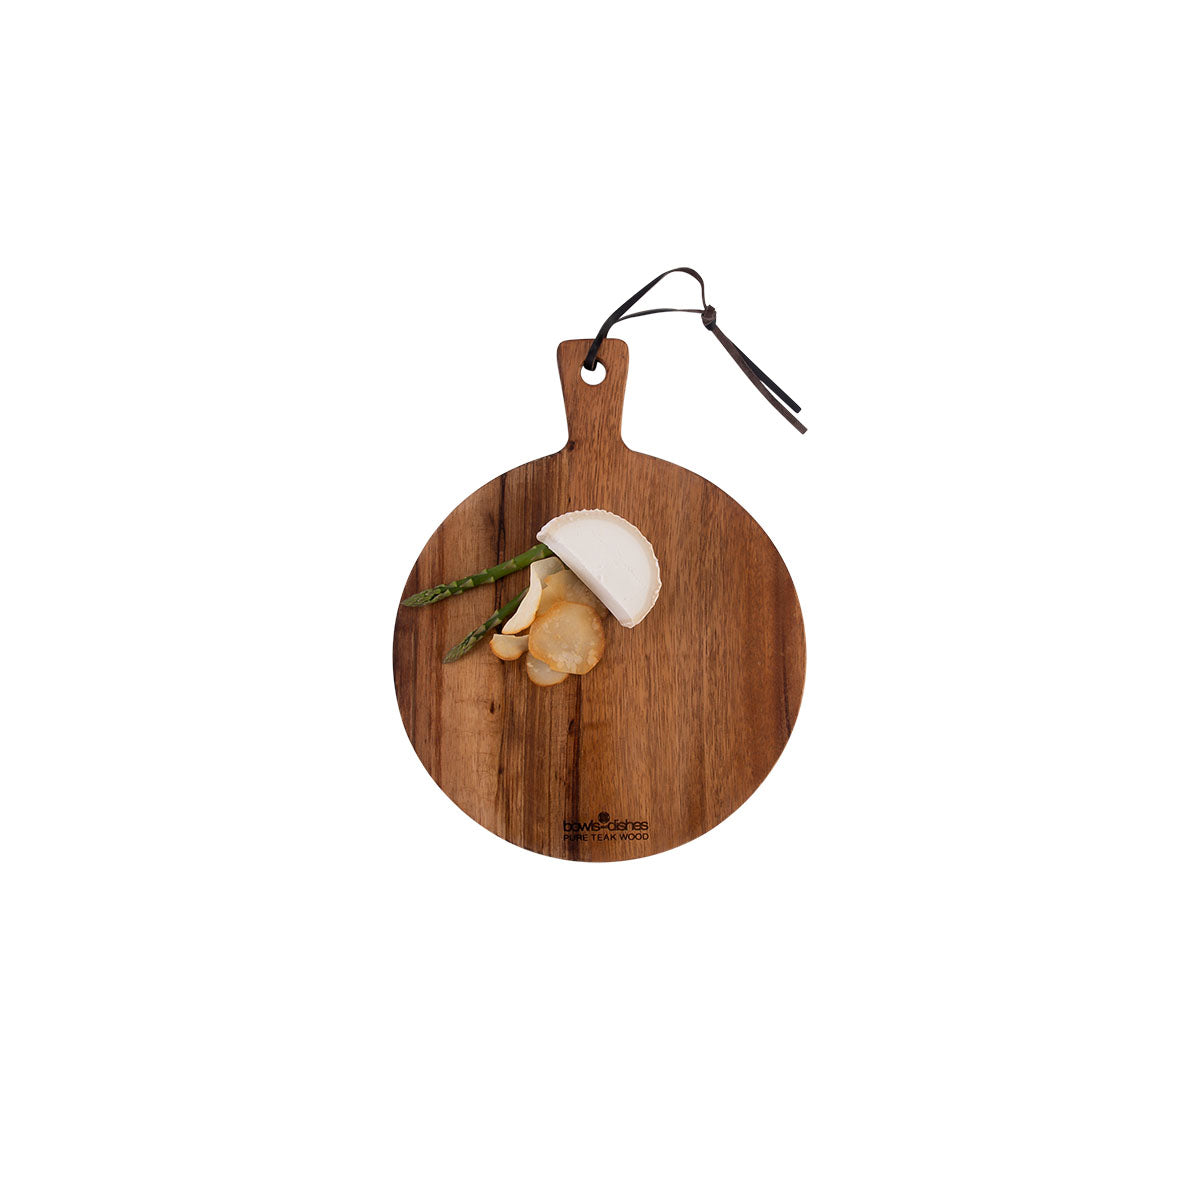 Bowls & Dishes Teak Wood serveerplank rond met handvat - 25cm